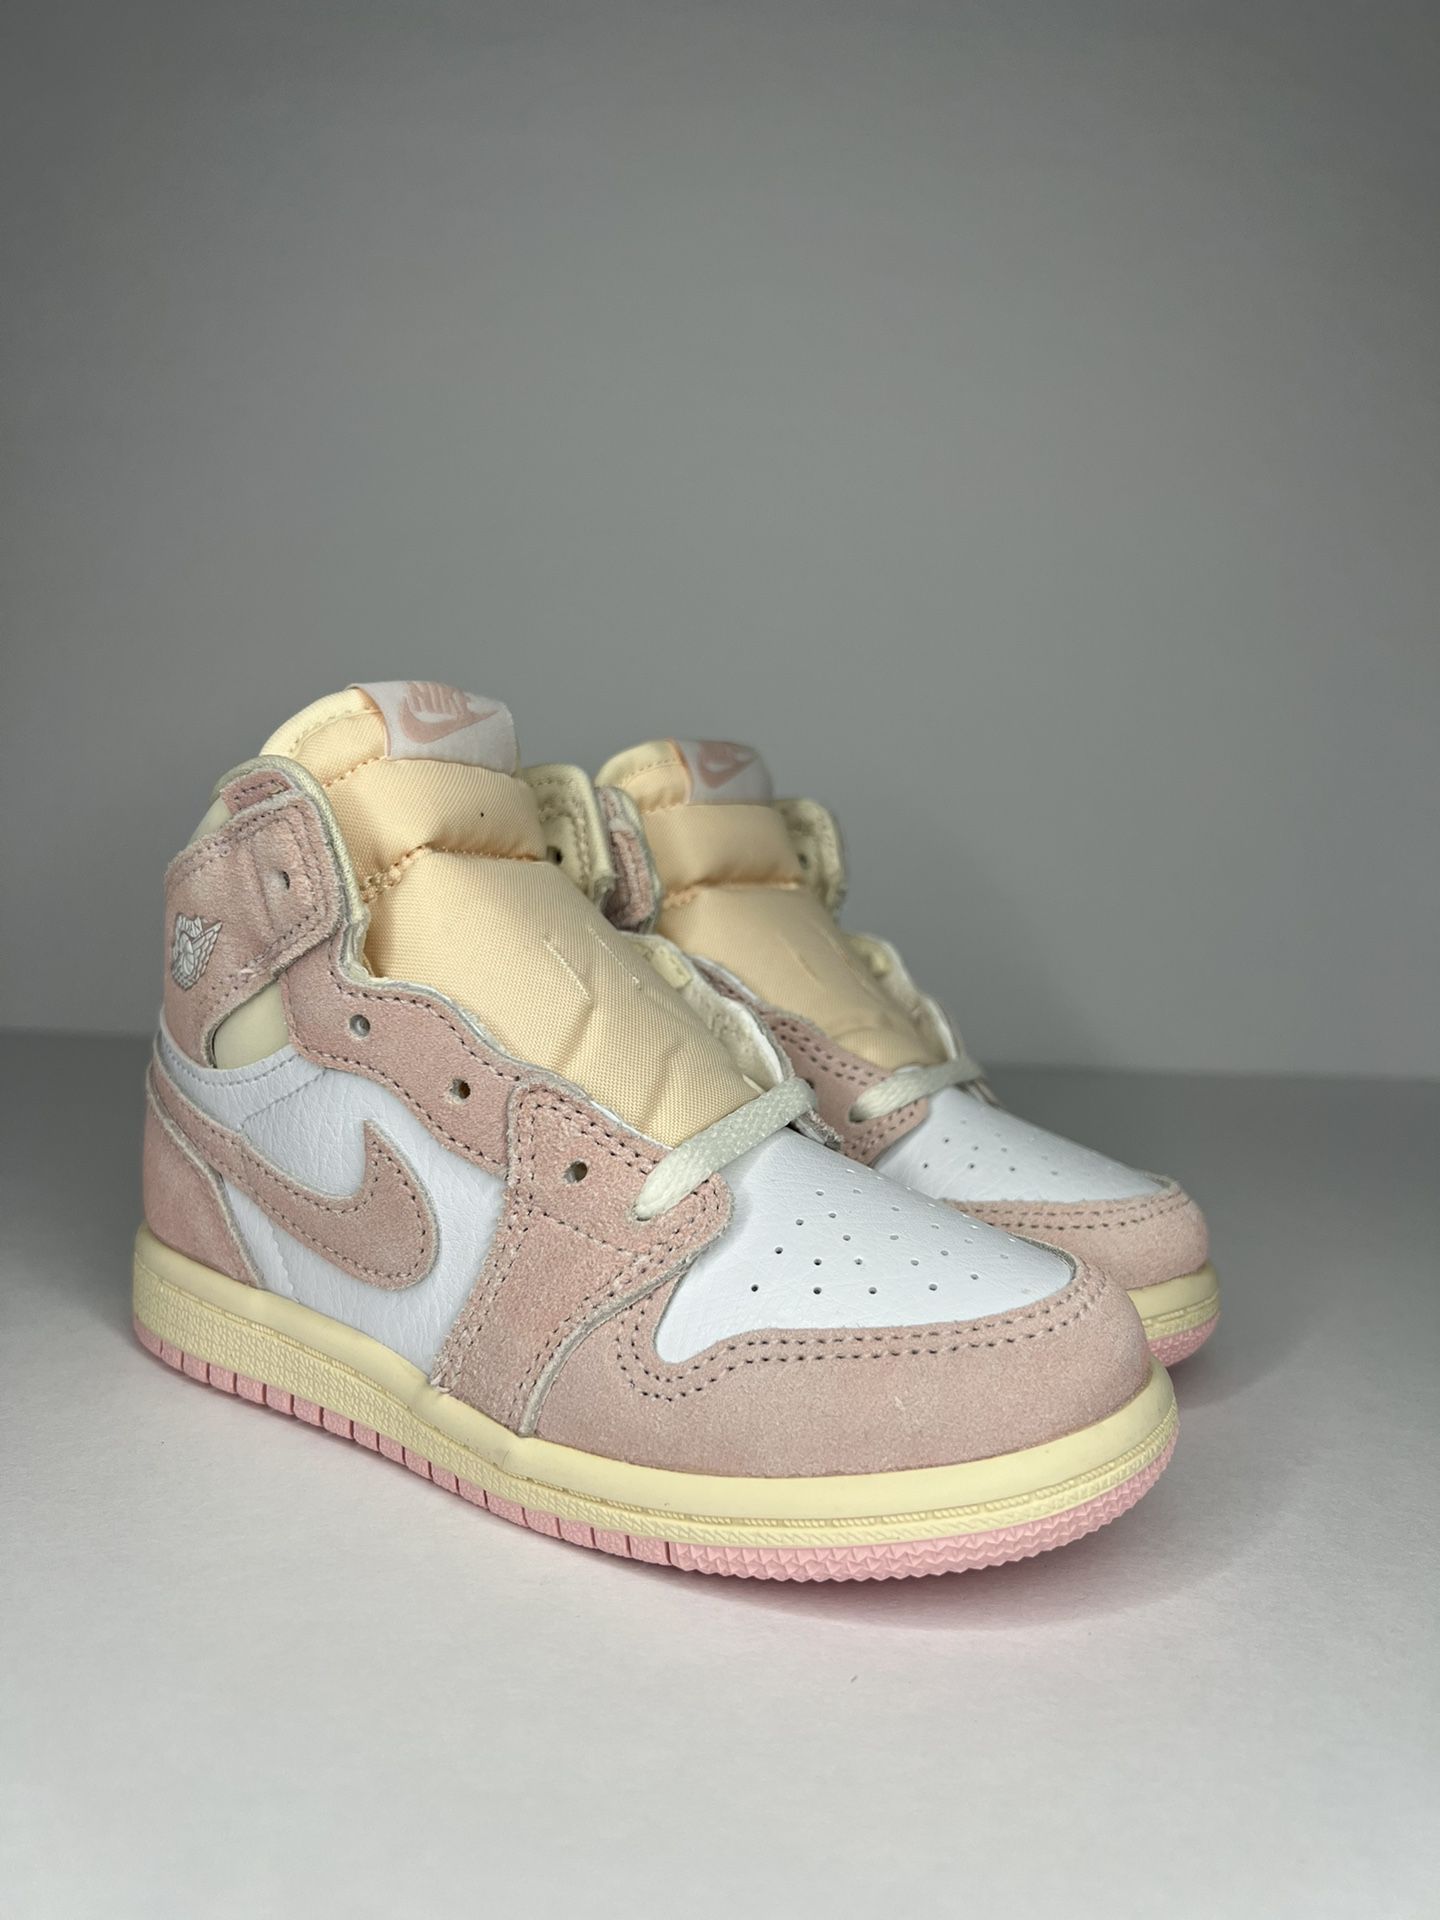 Jordan 1 Baby shoe 9C and 8C sizes 